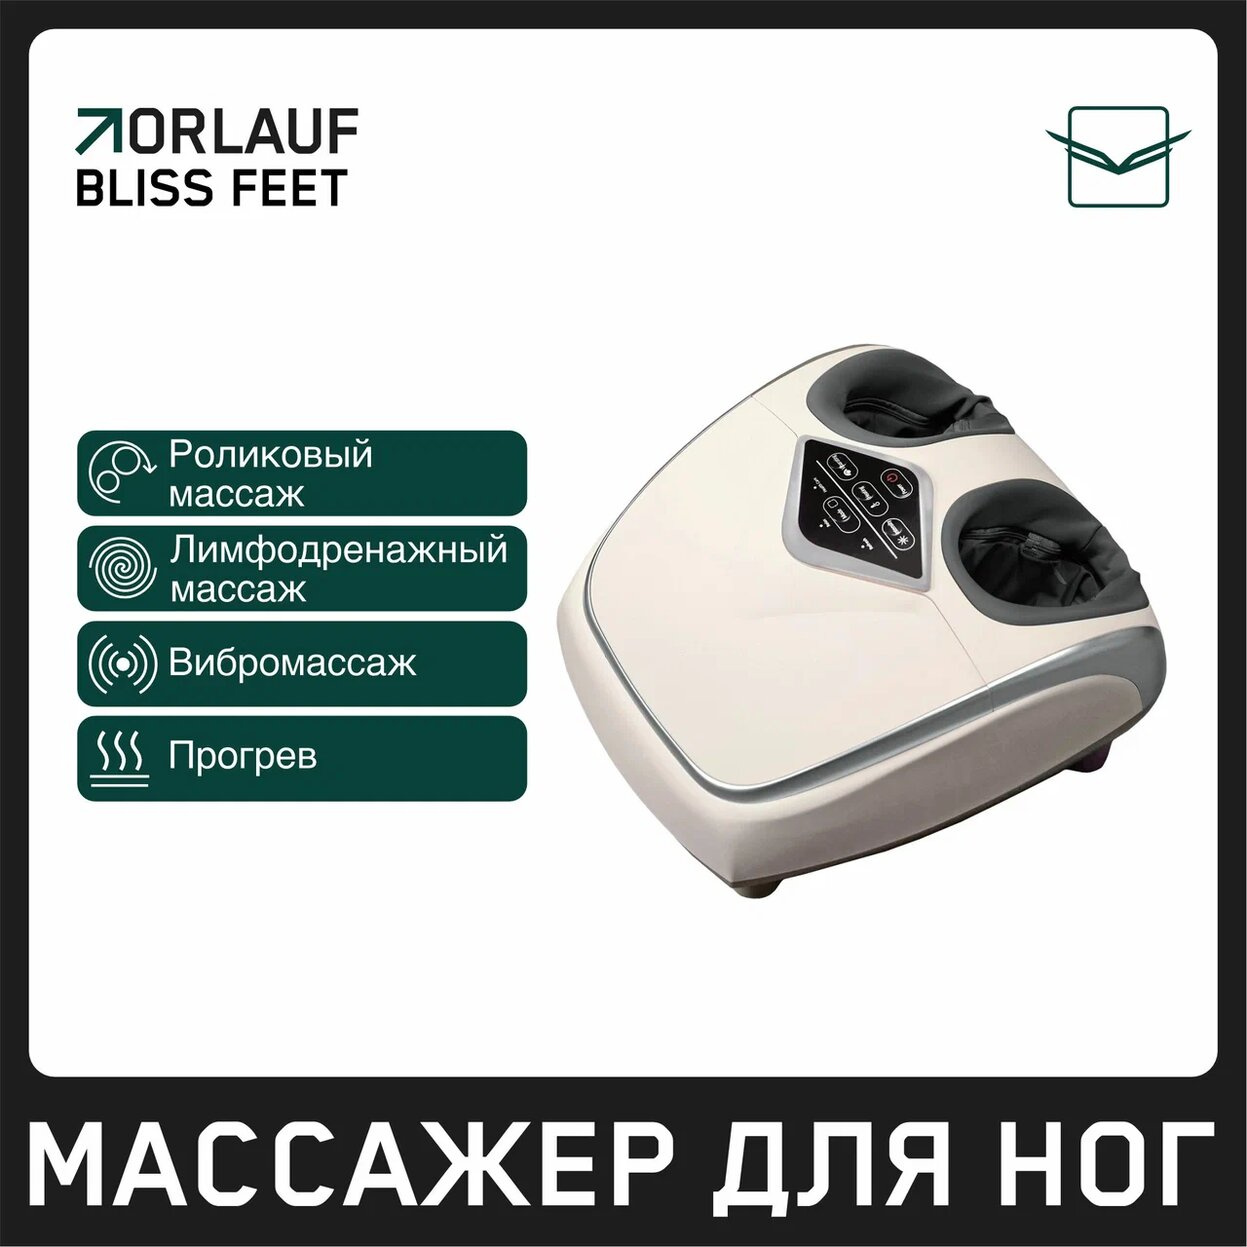 Orlauf Bliss Feet из каталога массажеров для ног в Санкт-Петербурге по цене 27600 ₽